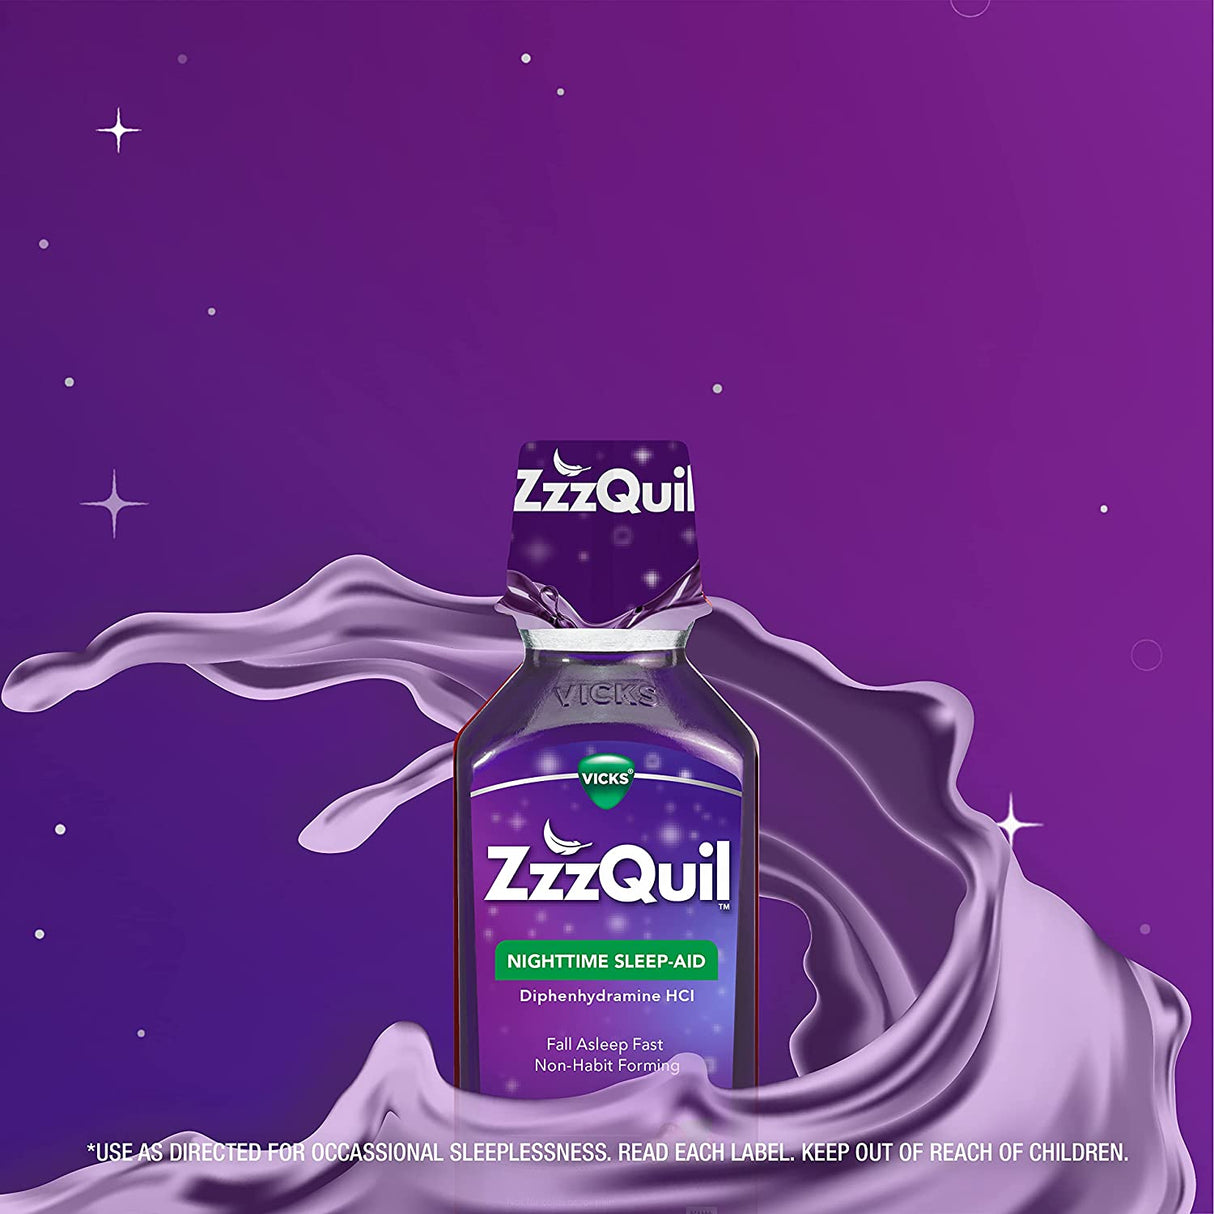 Vicks ZzzQuil Nighttime Sleep Aid Liquid 12Oz.